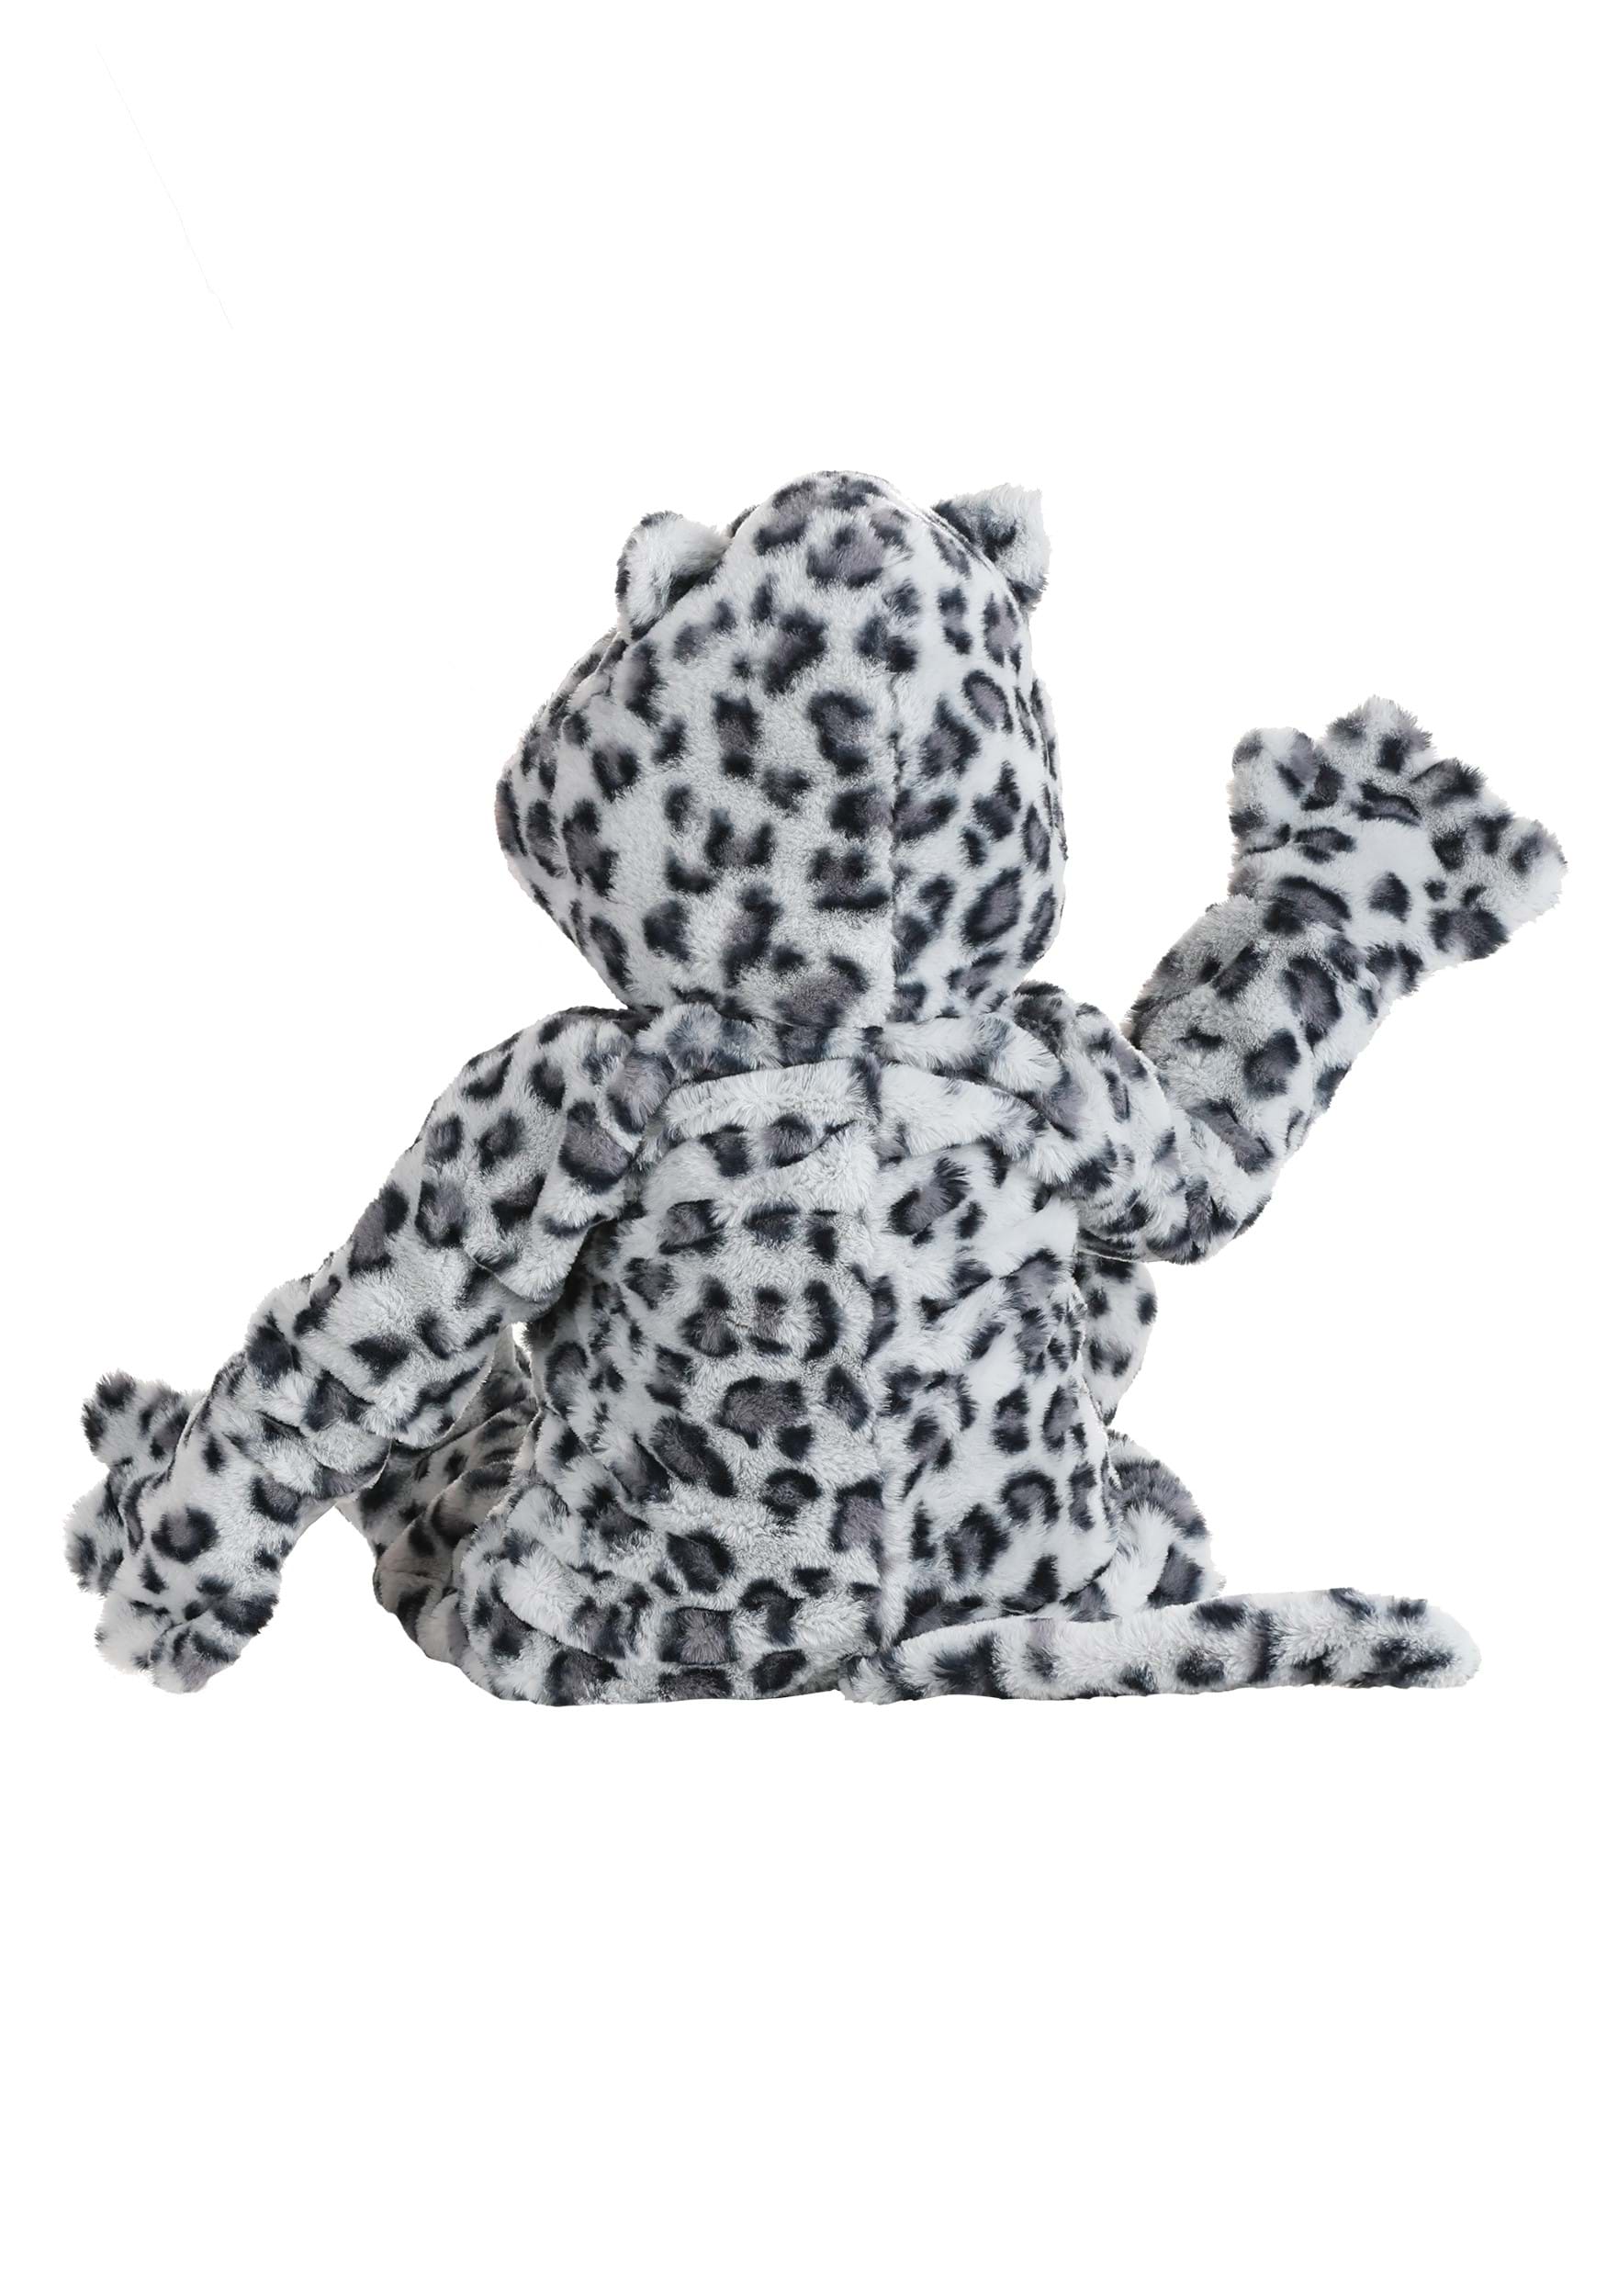 Snow Leopard Infant Costume